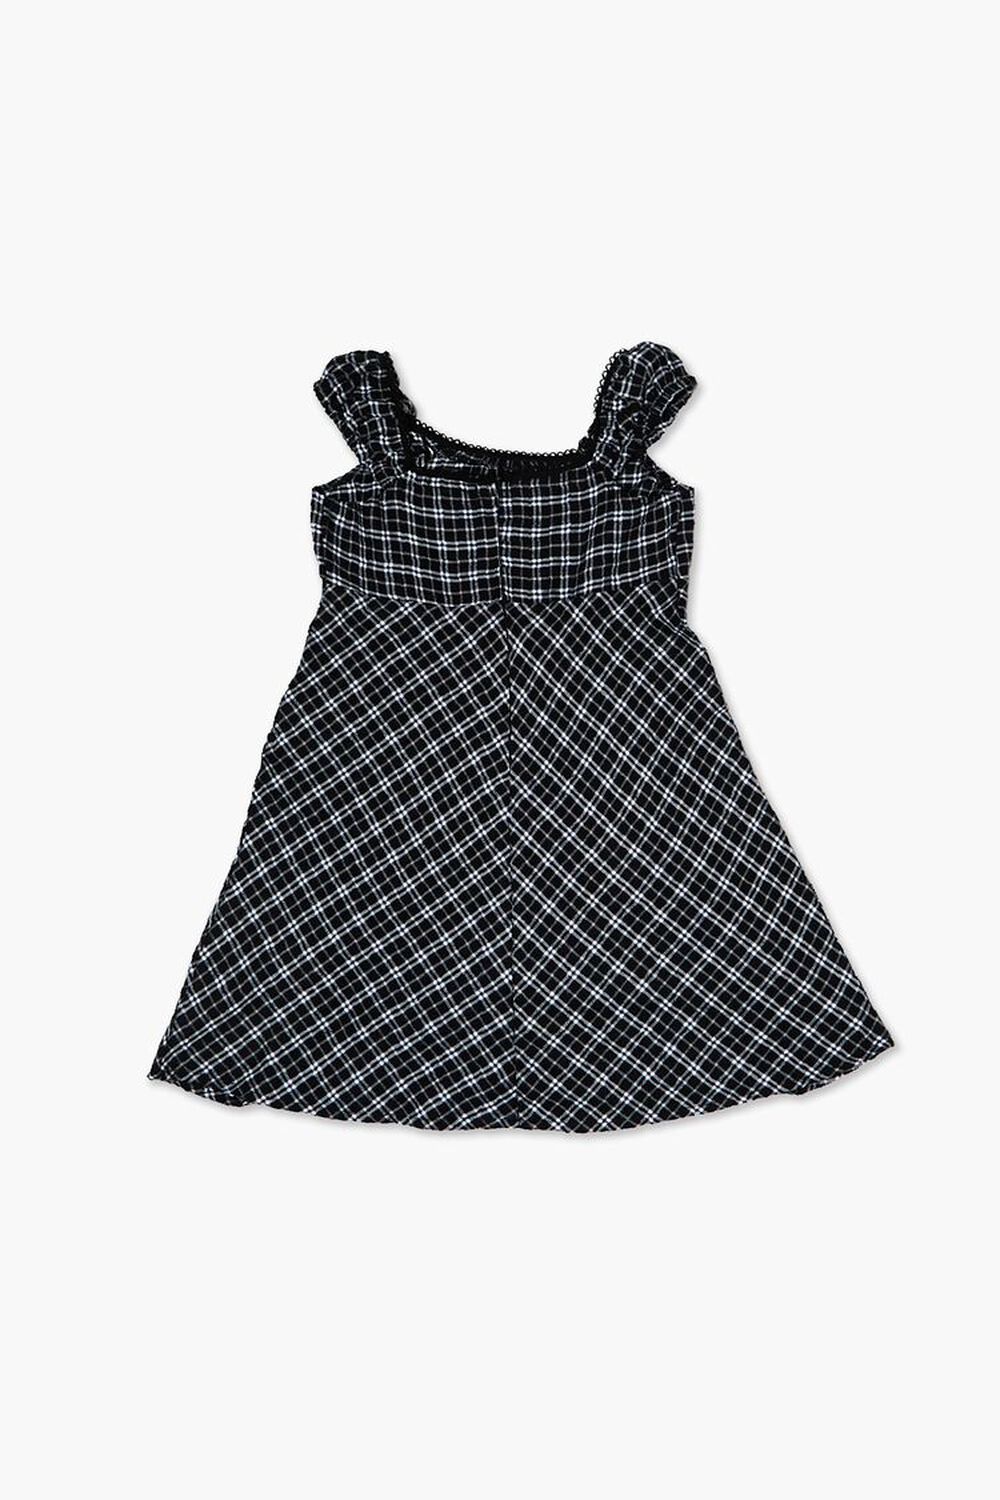 BLACK/MULTI Girls Plaid Cap-Sleeve Dress (Kids), image 2